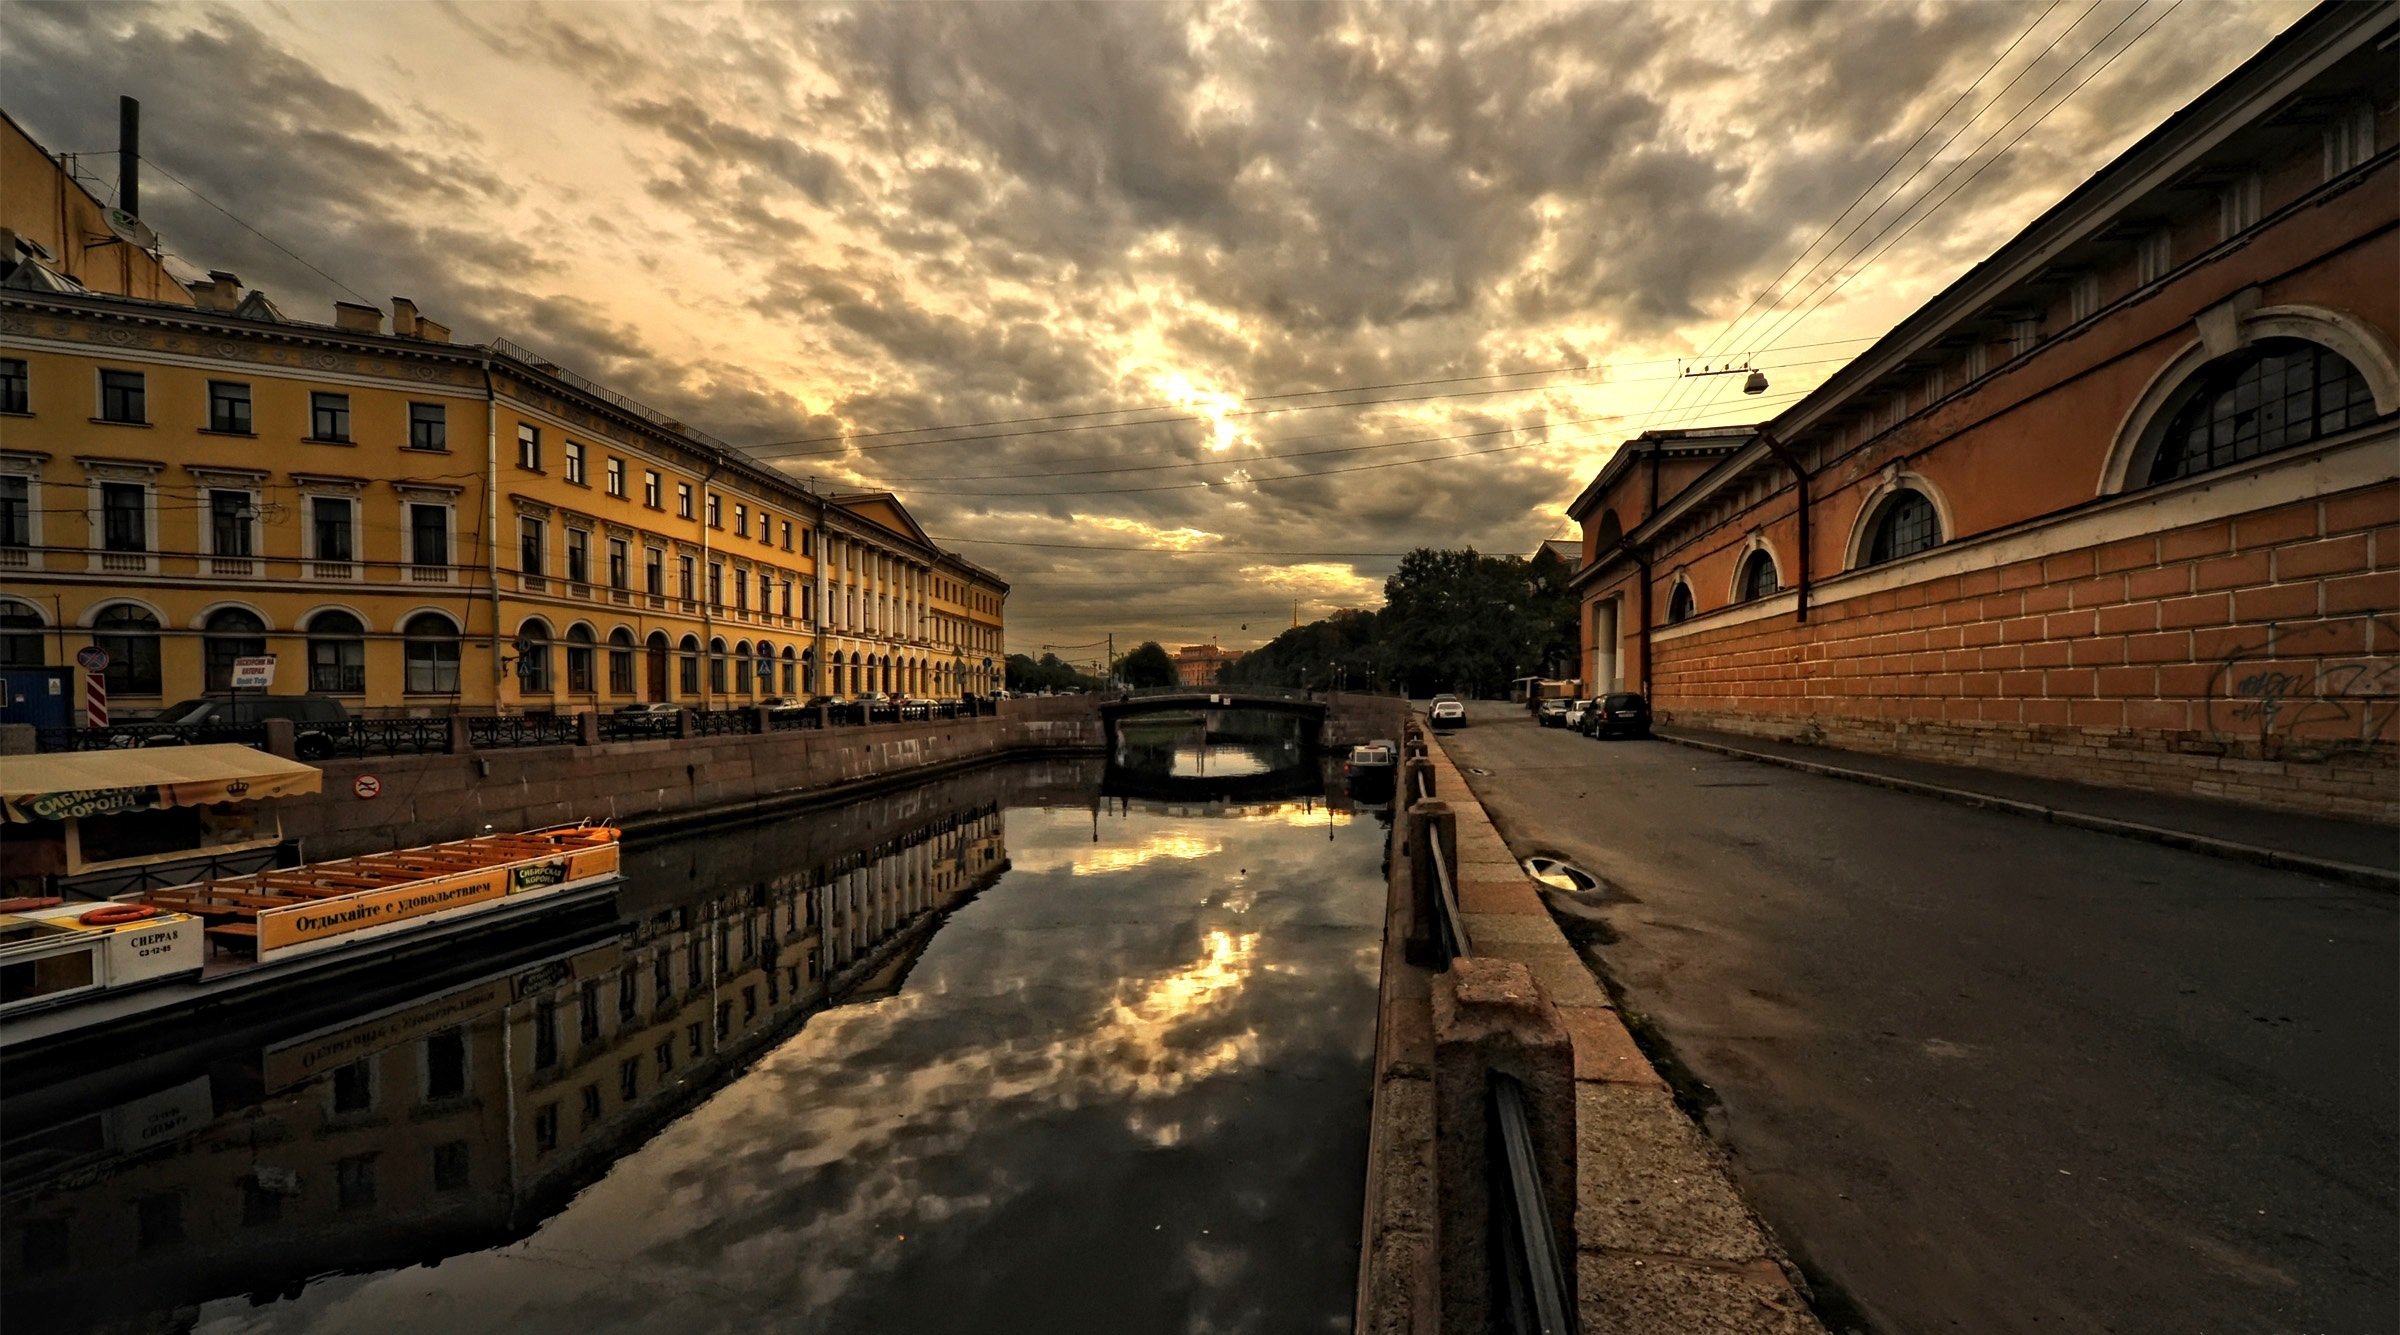 Man Made Saint Petersburg HD Wallpaper | Background Image